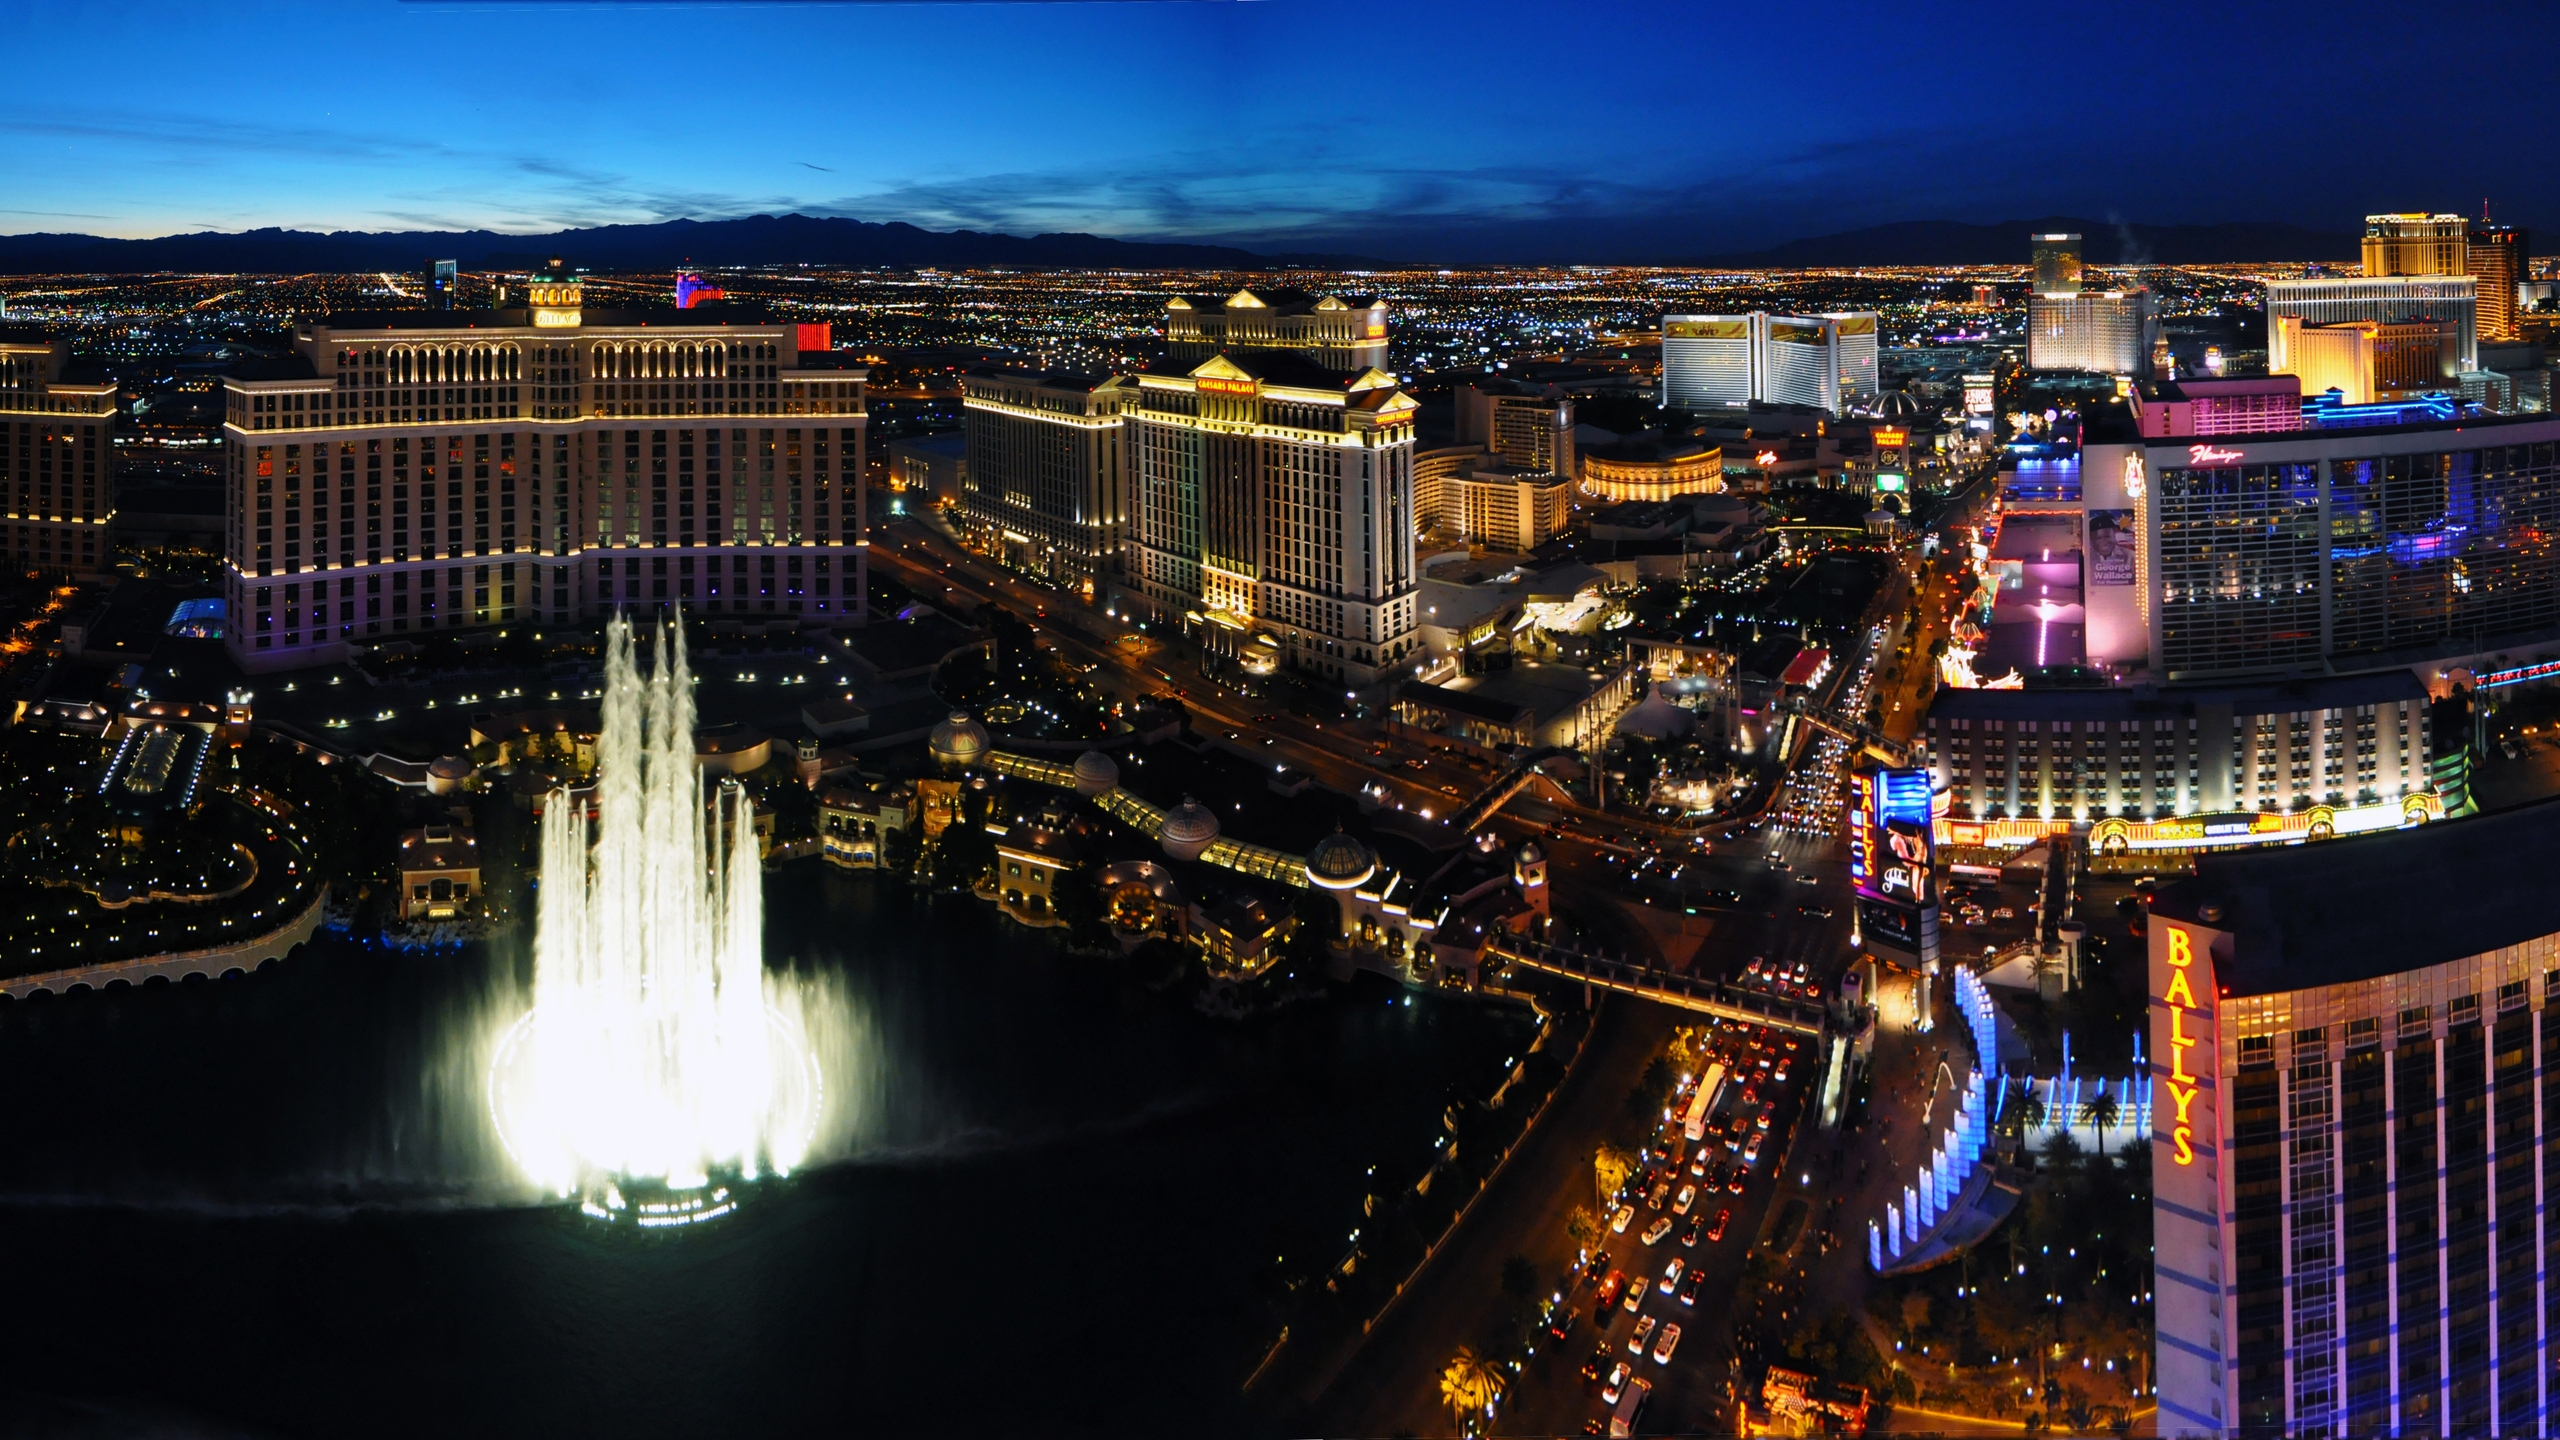 Las Vegas Night for 2560x1440 HDTV resolution